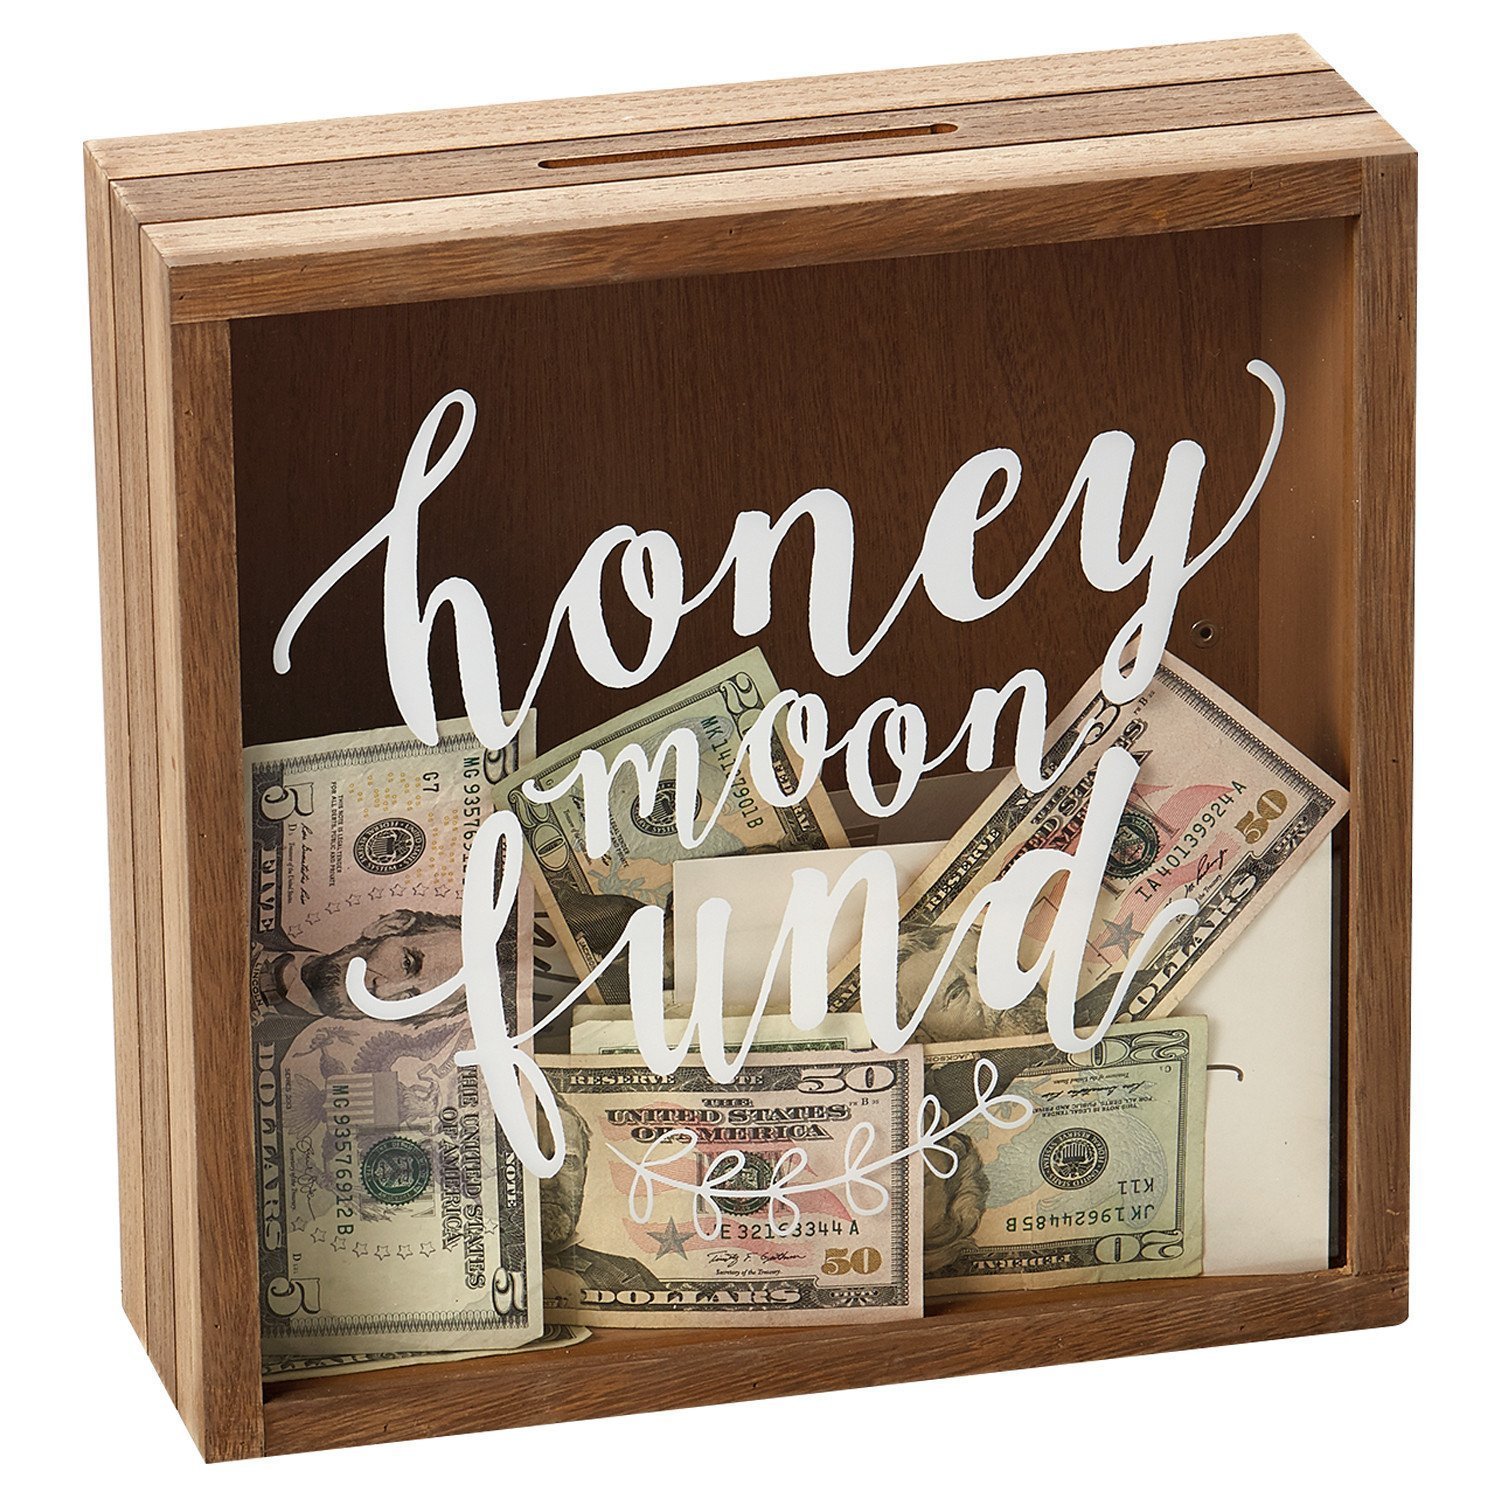 Honeymoon fund bank